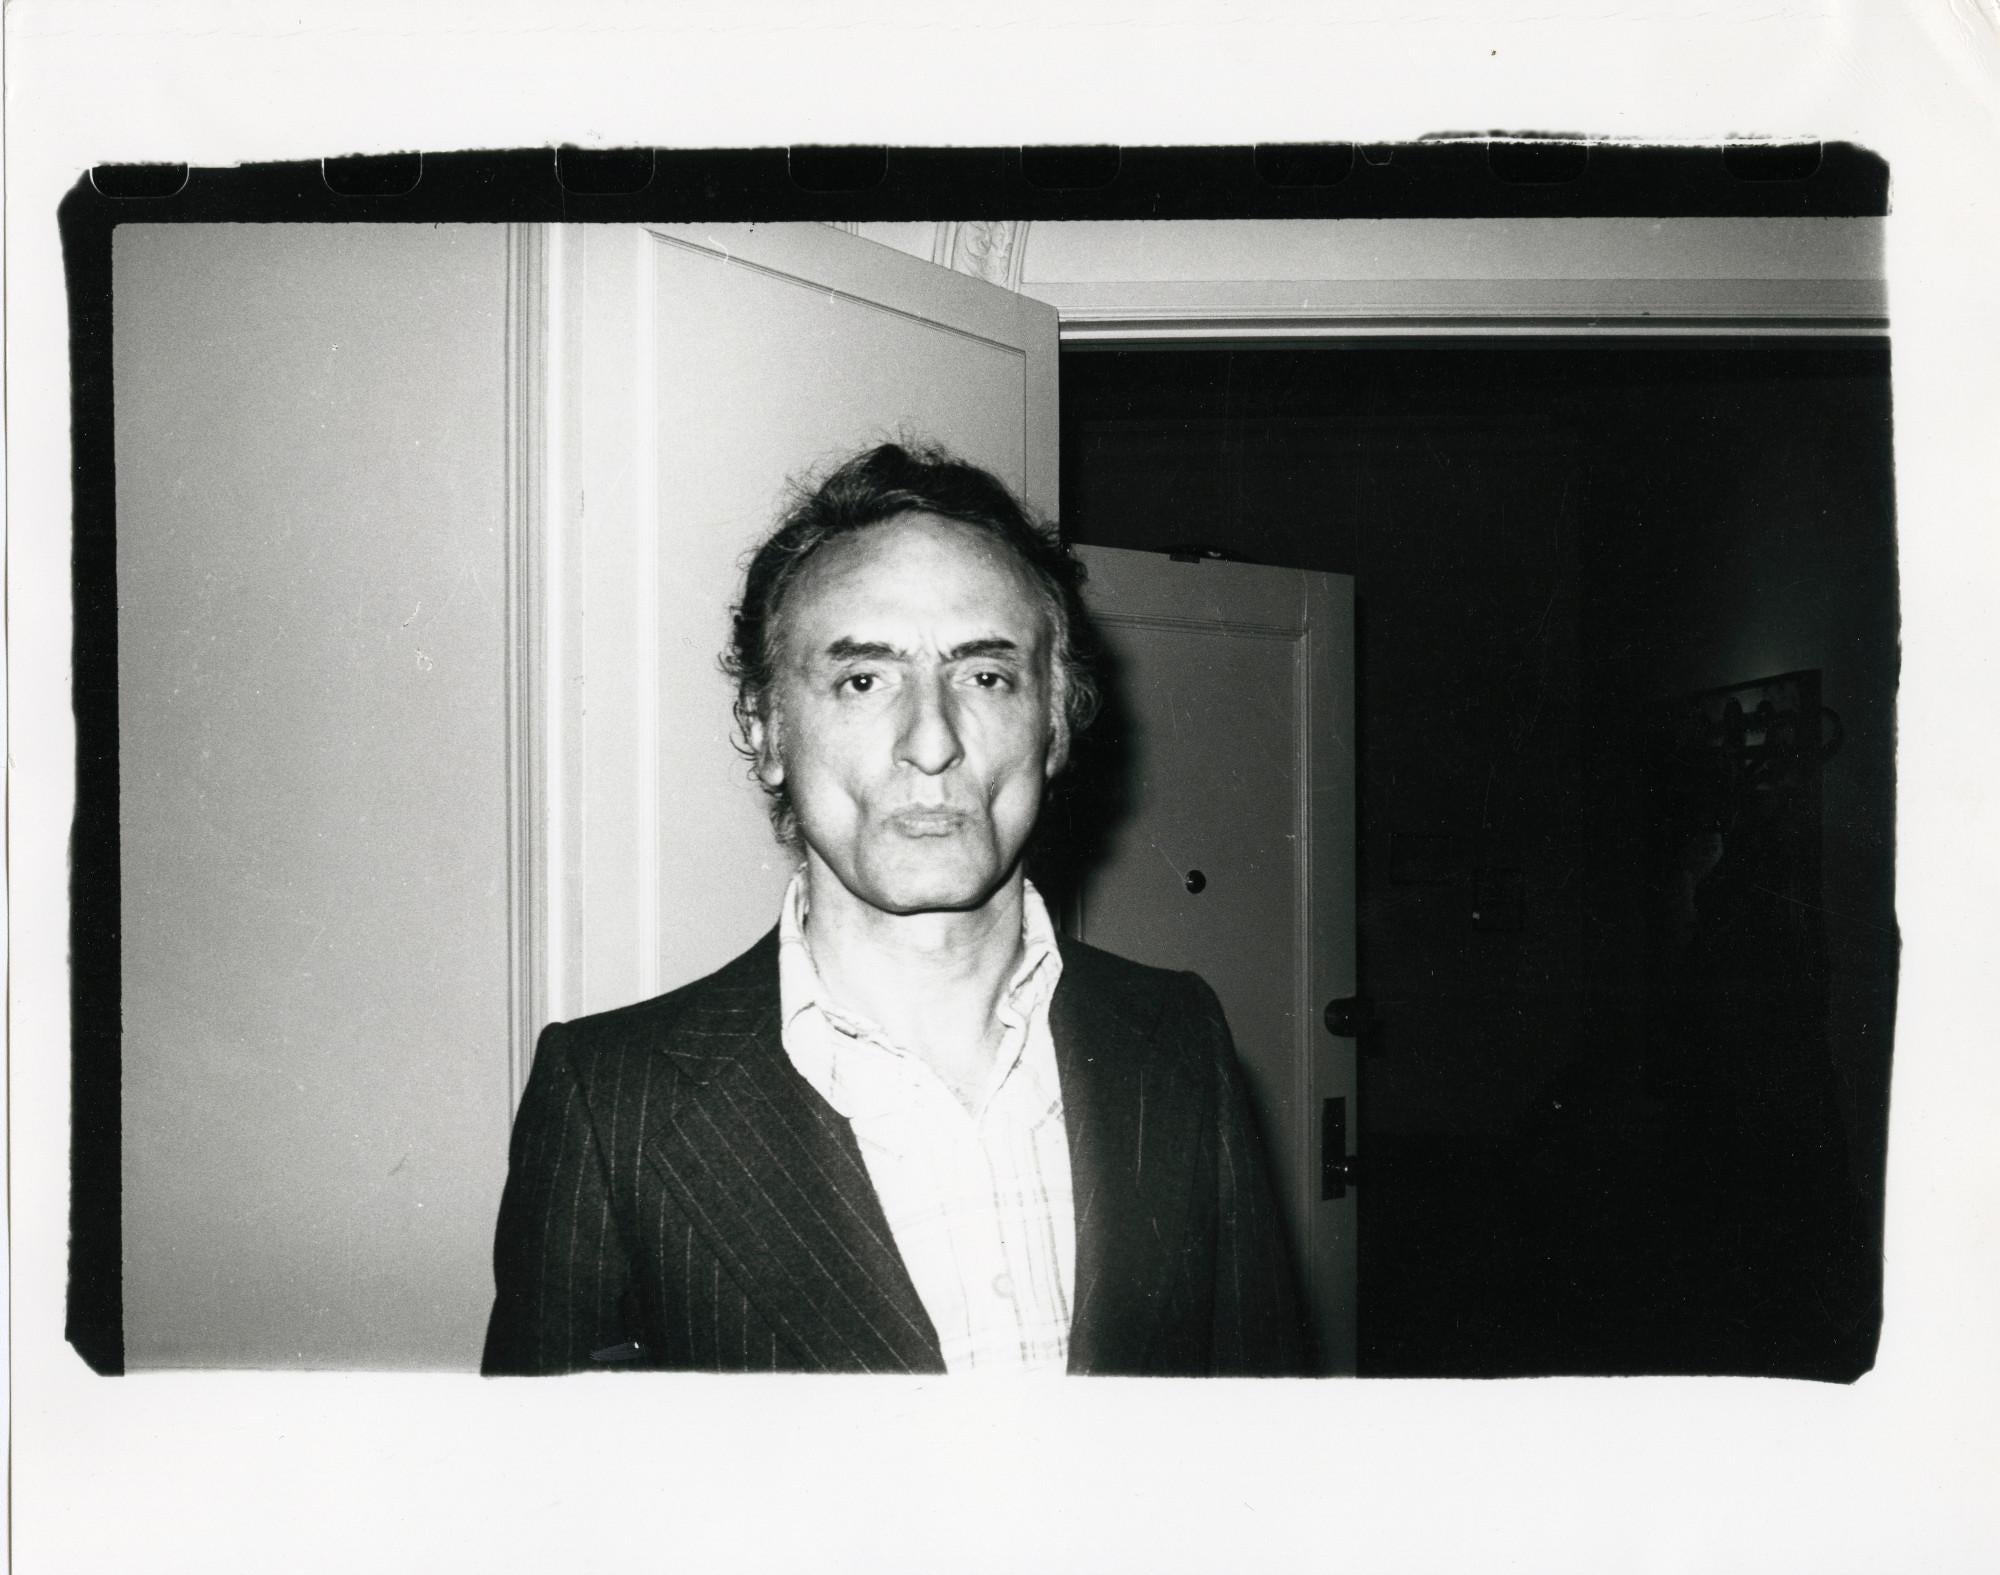 Andy Warhol Portrait Photograph - Larry Rivers